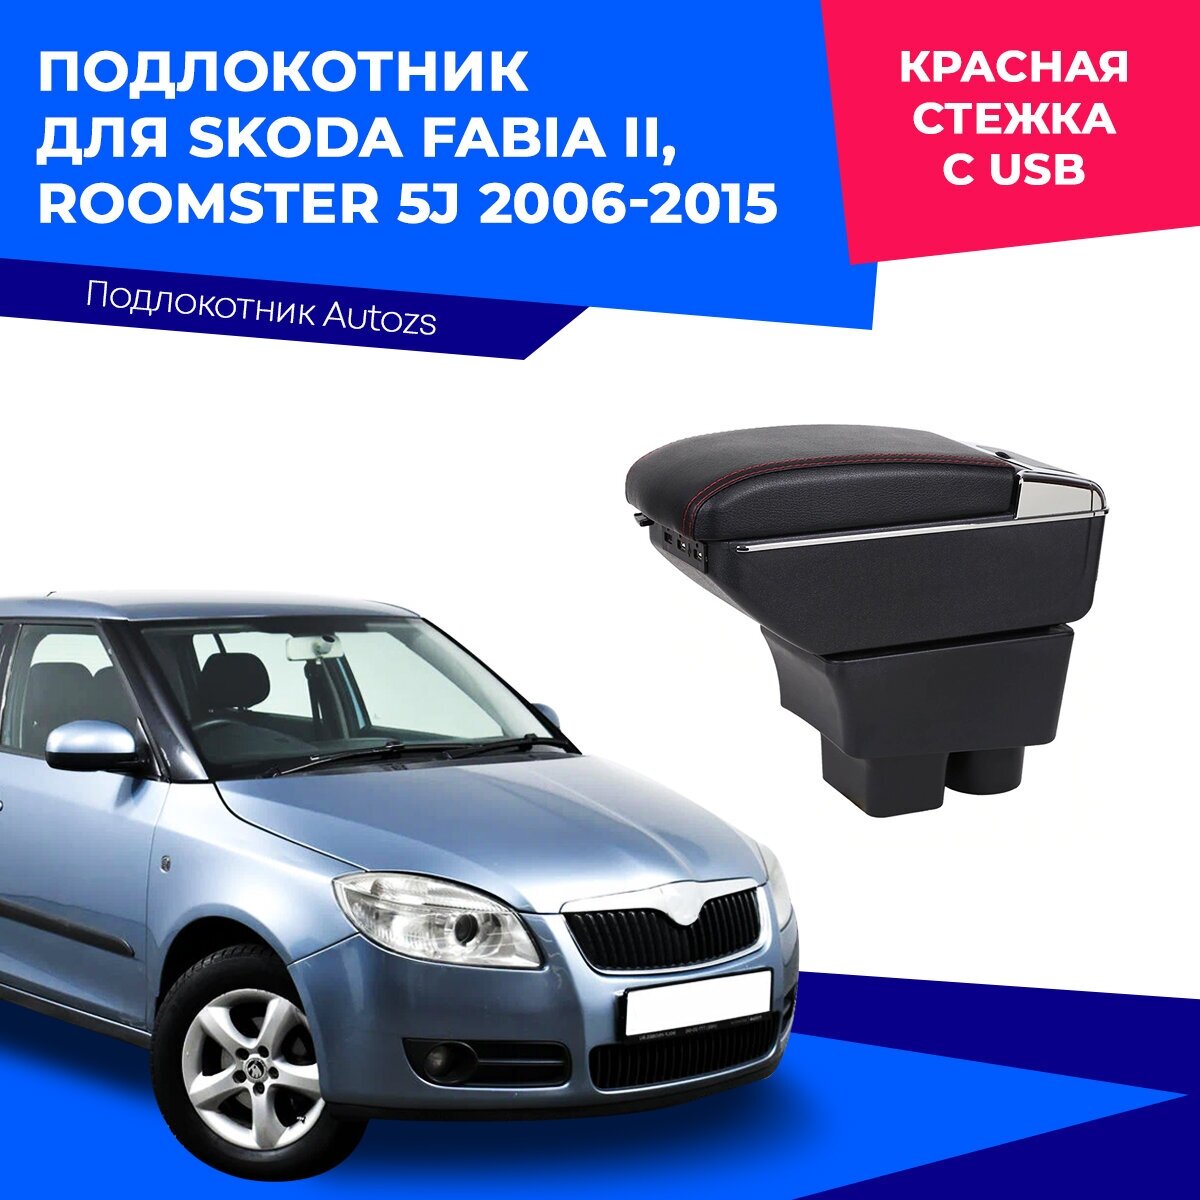 Подлокотник для Skoda Fabia II/Roomster 5J 2006-2015 c USB